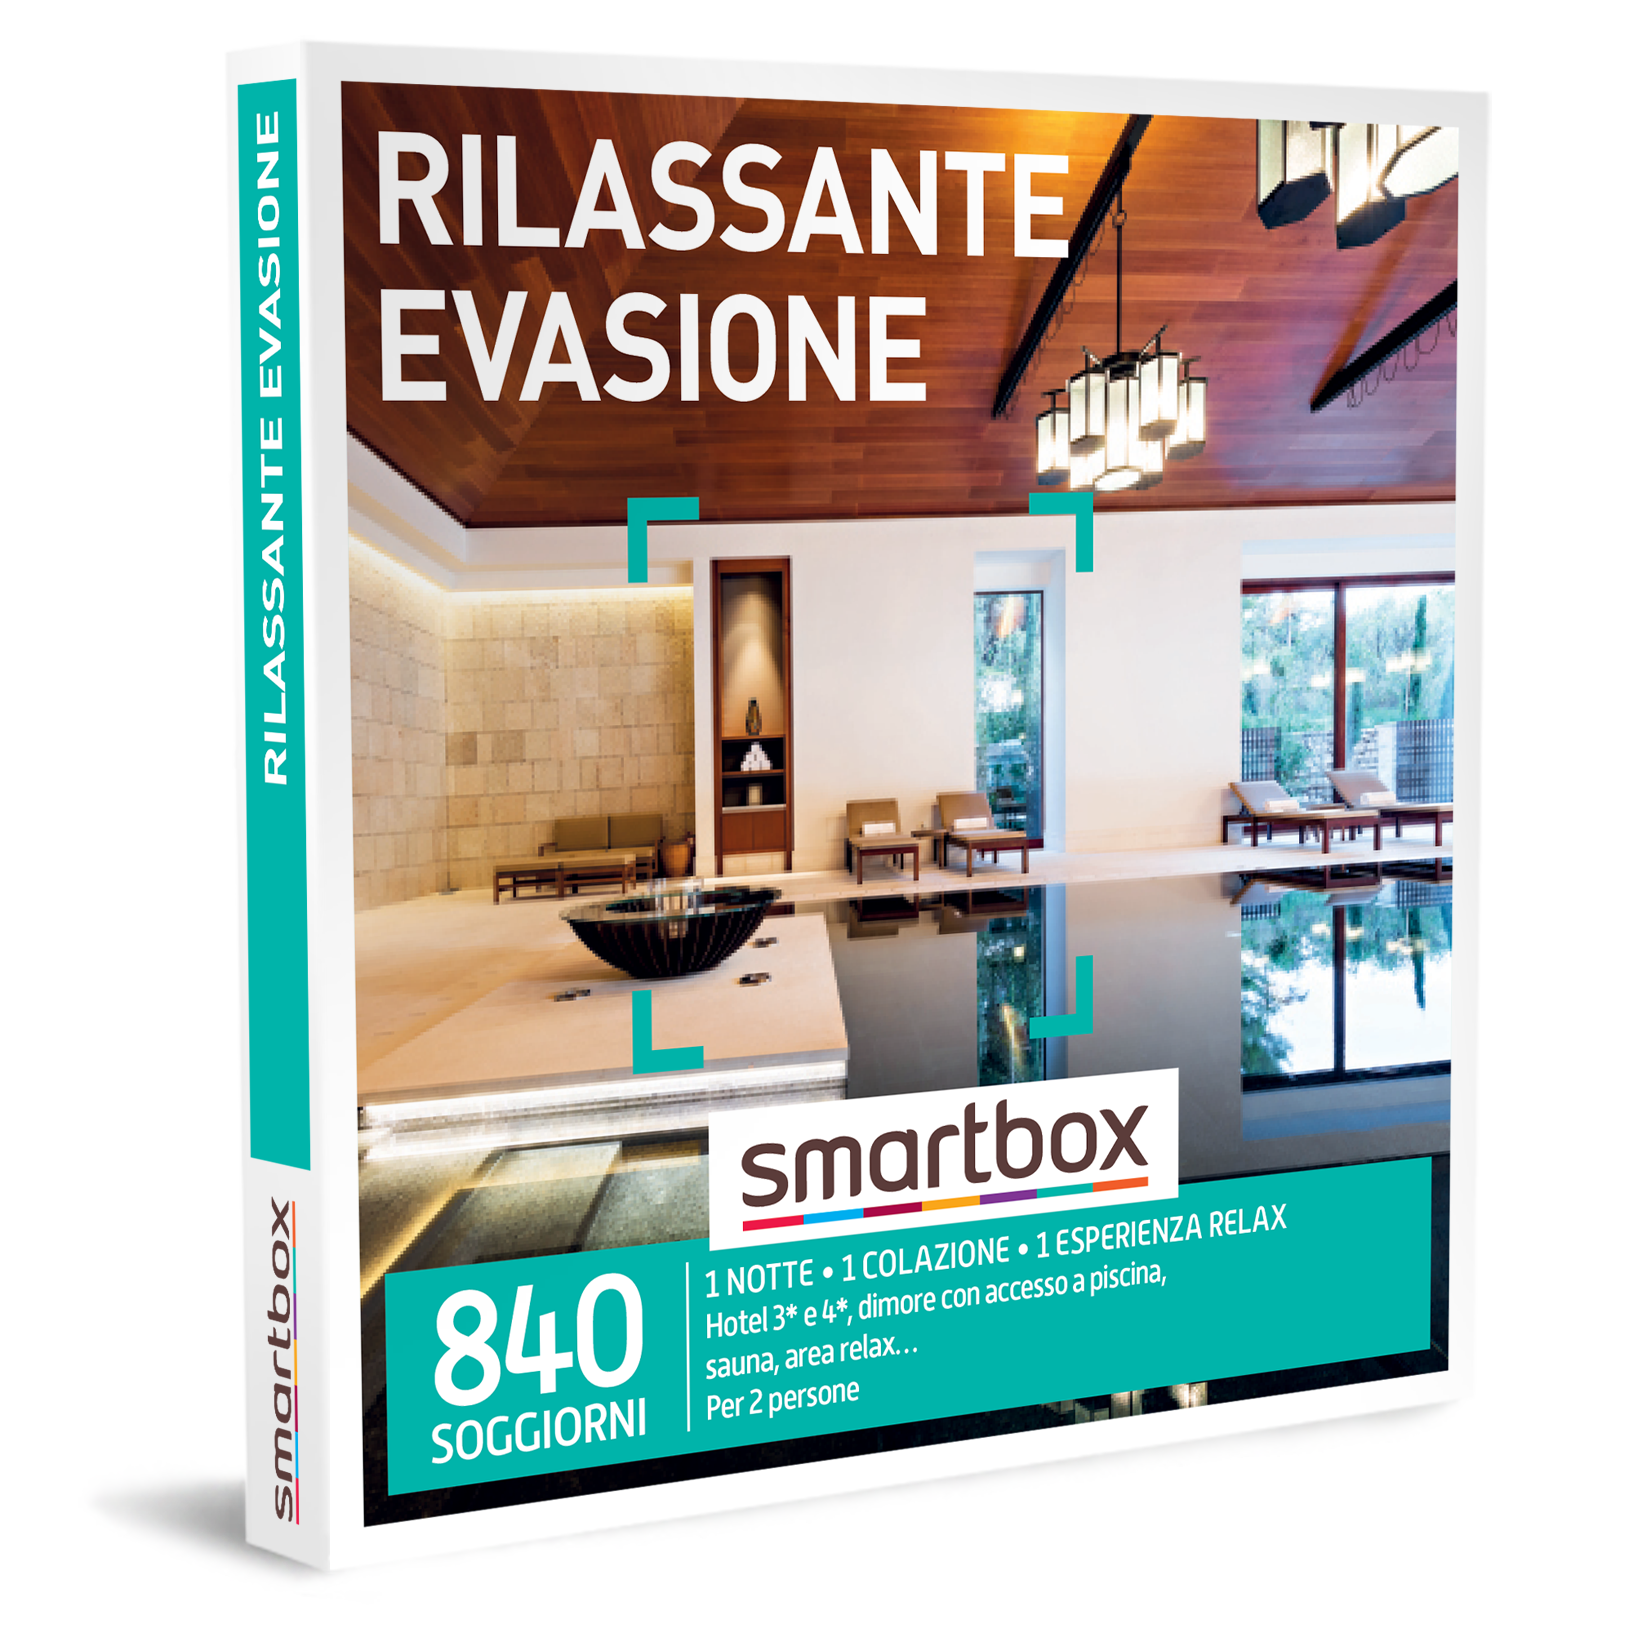 ORIGINALE CARTACEO RILASSANTE EVASIONE SUPER OFFERTA SMARTBOX 